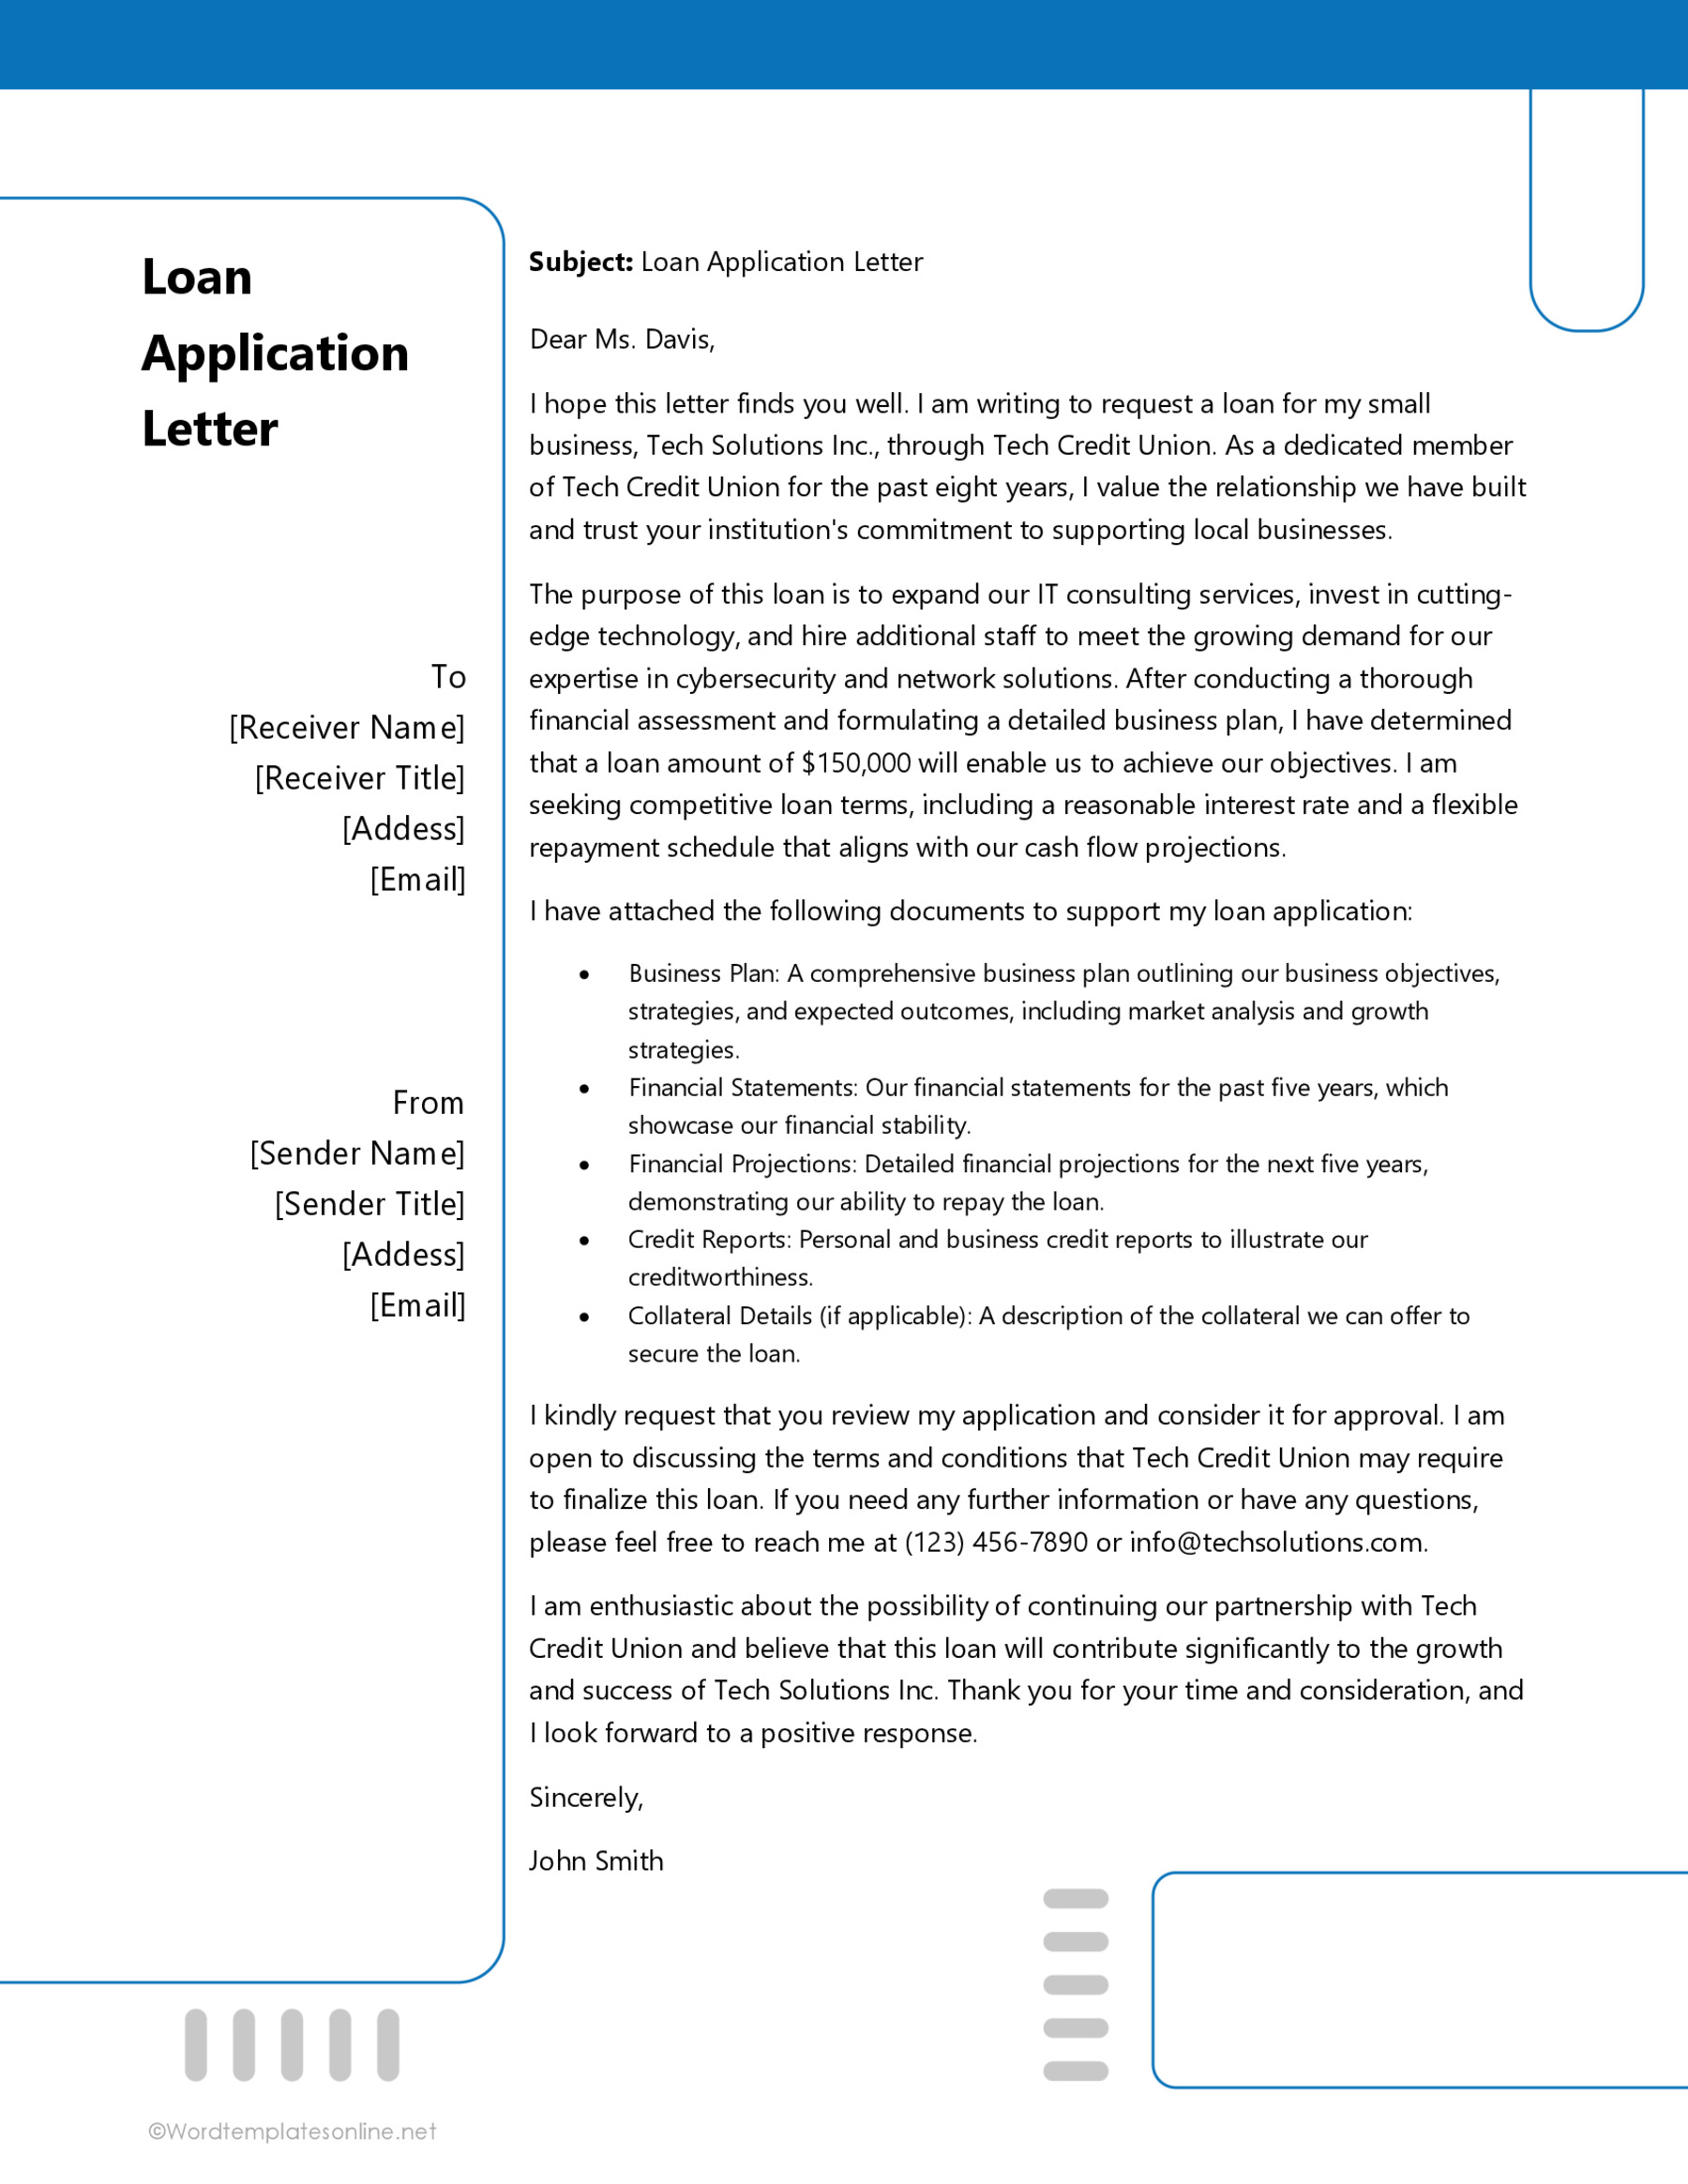 Sample Loan Application Letter Format